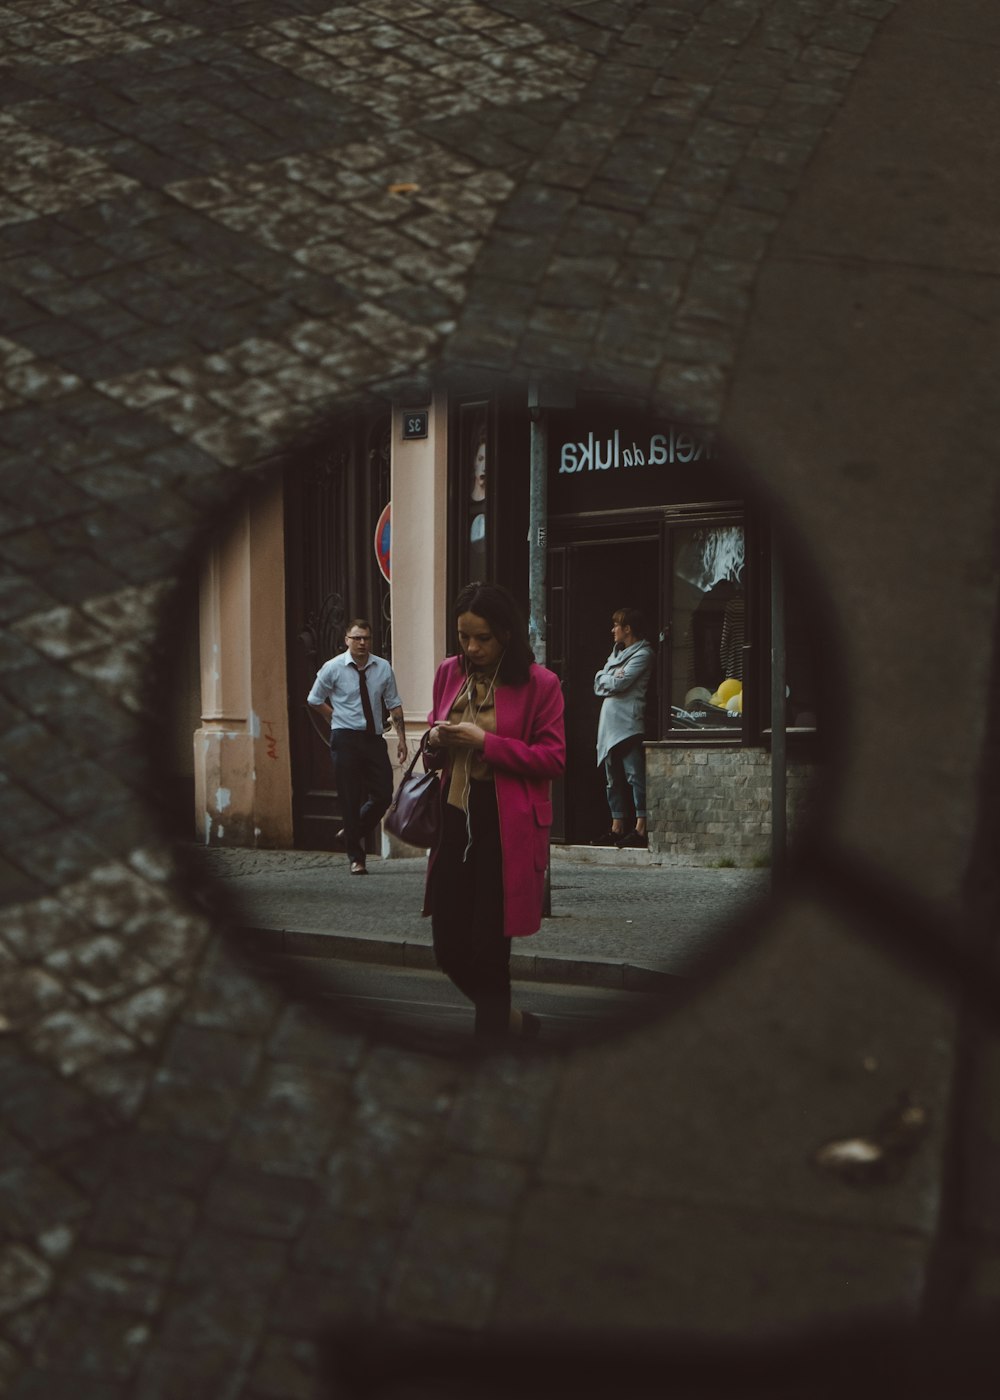 mirror showing woman wearing pink coat walking on street